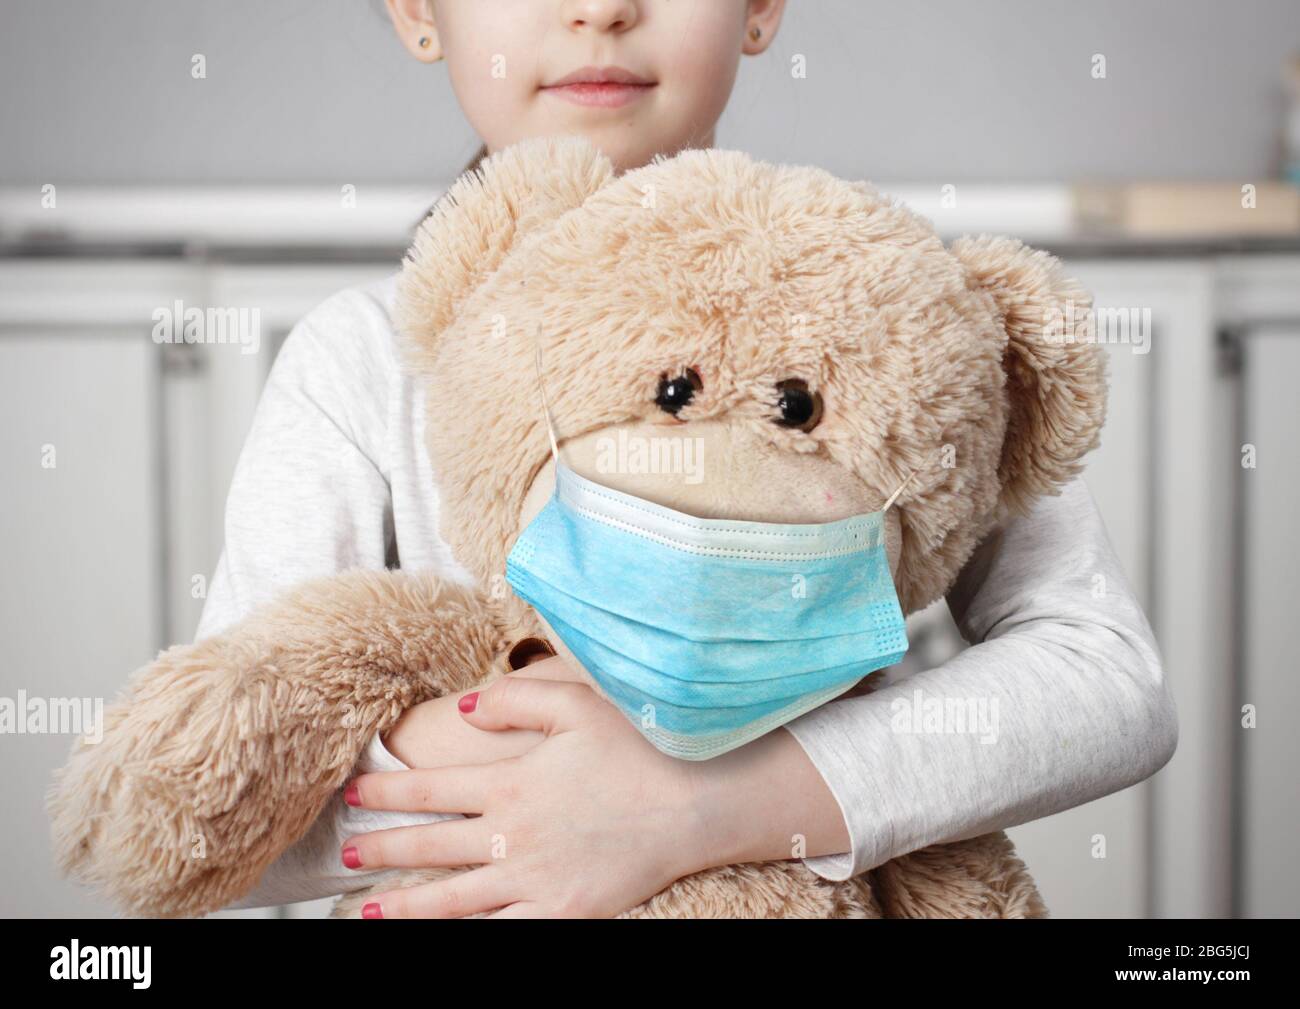 Niño en cuarentena debido a la epidemia de coronavirus. Niño niña acurruca juguete oso llevar máscara médica. Foto de stock